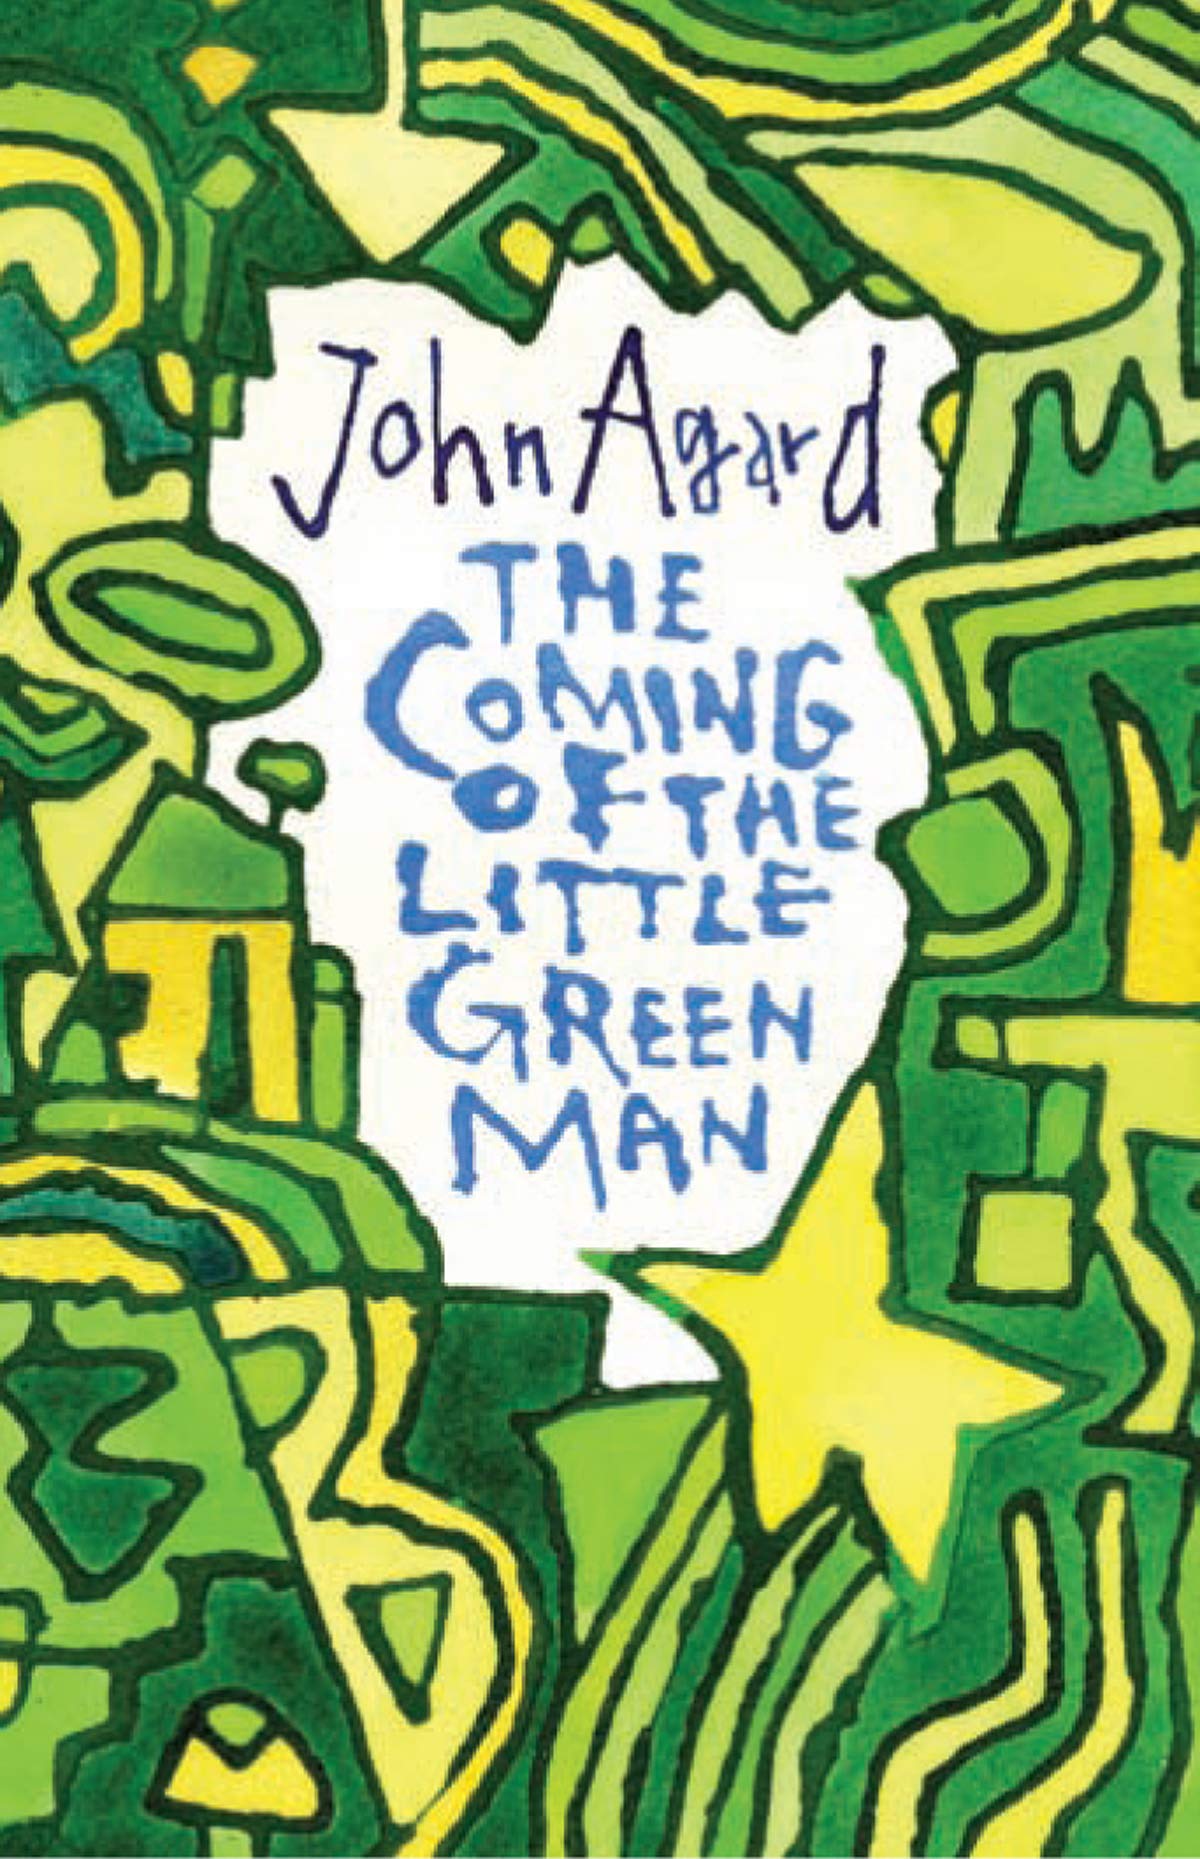 Little Green Man Logo - The Coming of the Little Green Man: Amazon.co.uk: John Agard ...